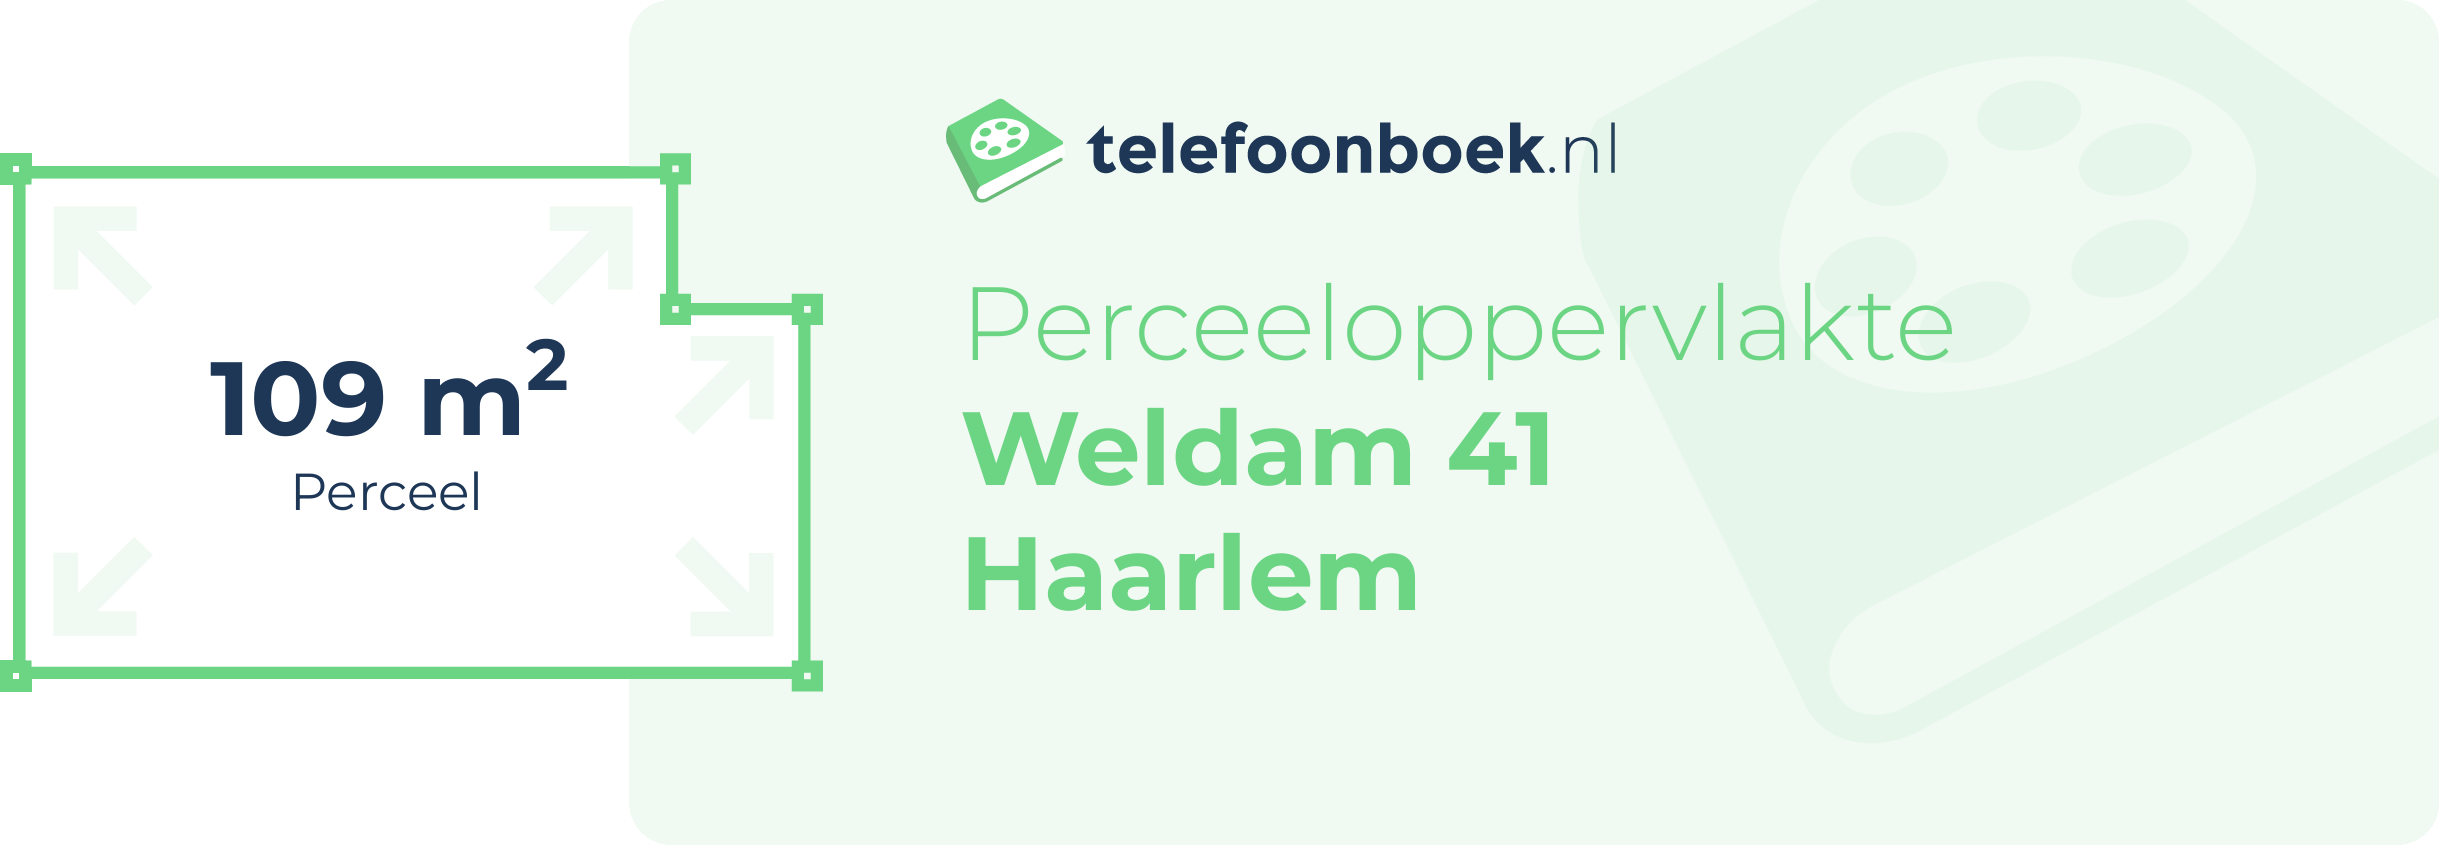 Perceeloppervlakte Weldam 41 Haarlem